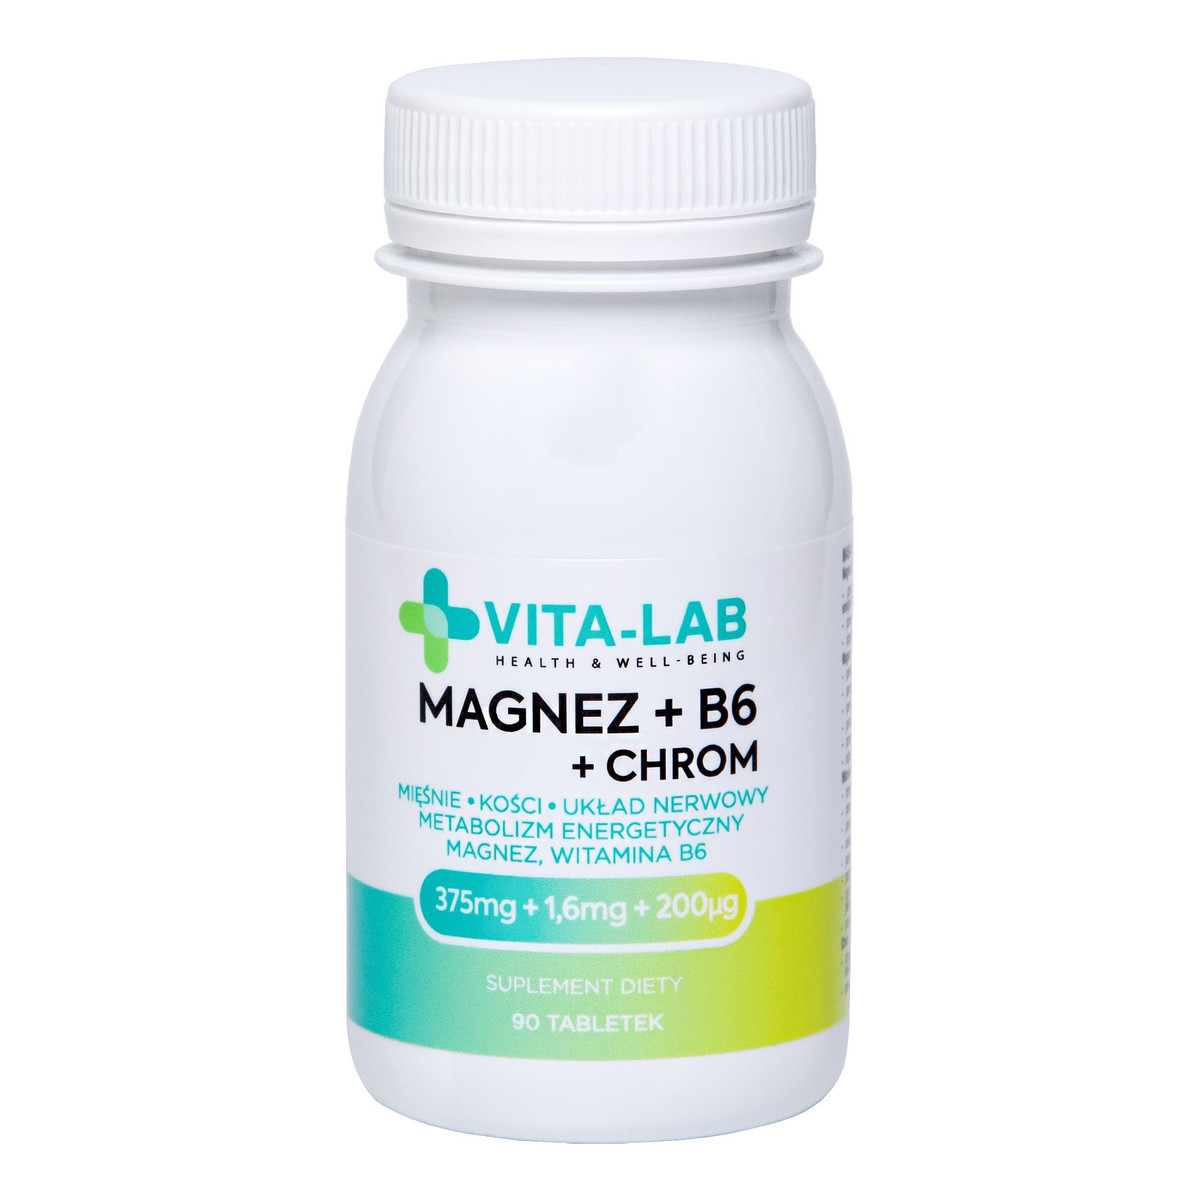 Vita-Lab Suplement diety magnez + b6 + chrom, n90